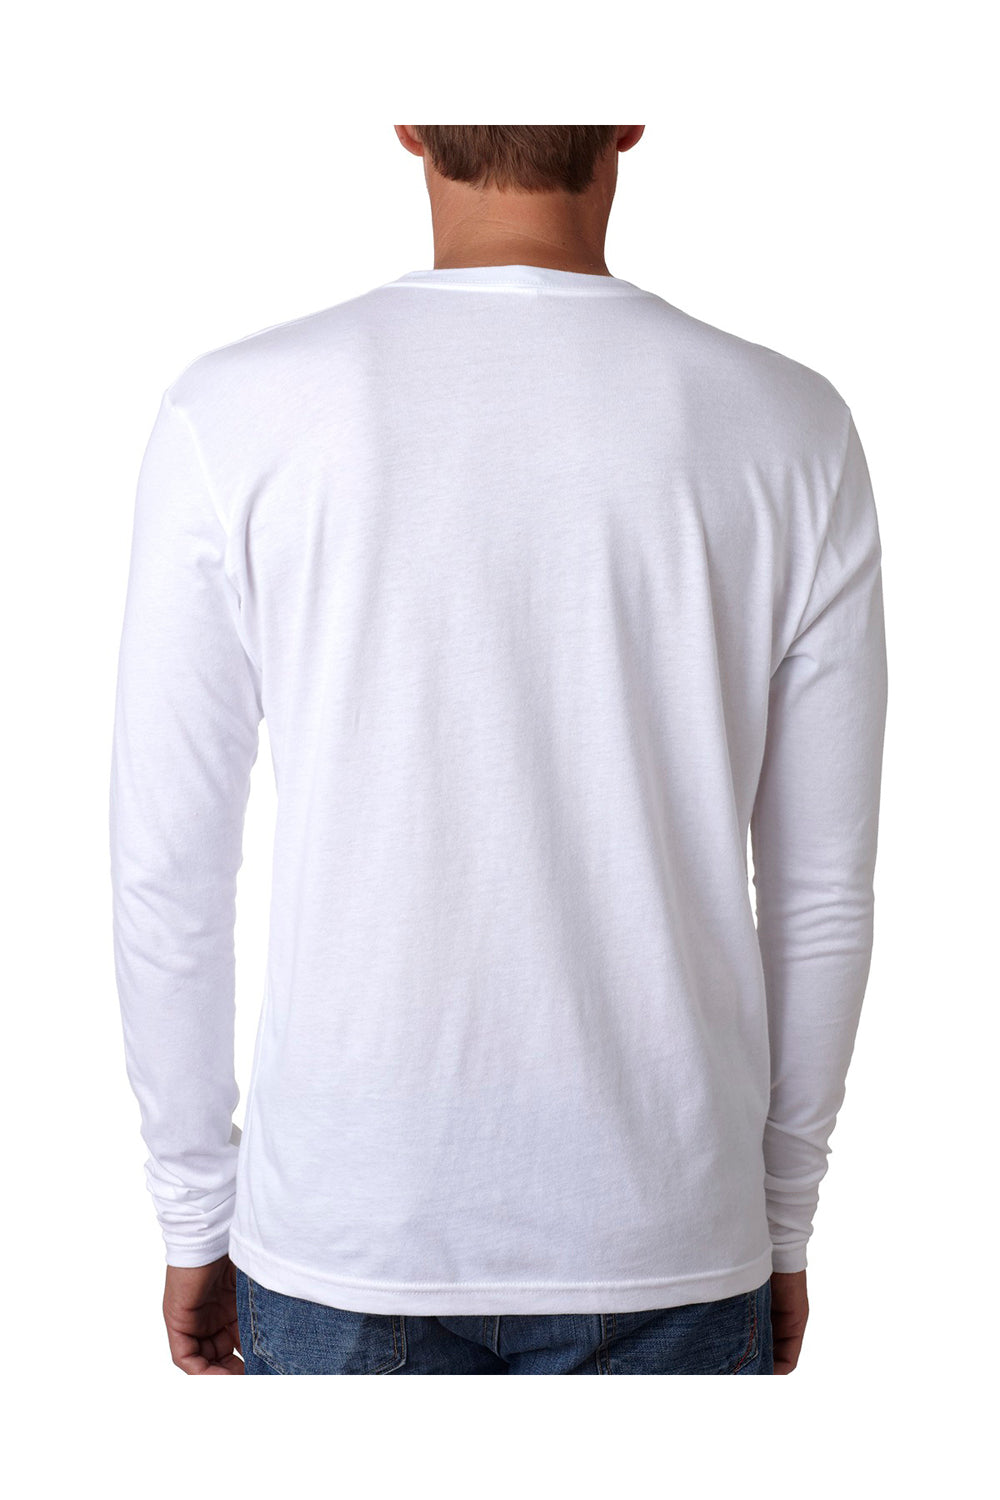 Next Level N3601 Mens Fine Jersey Long Sleeve Crewneck T-Shirt White Back